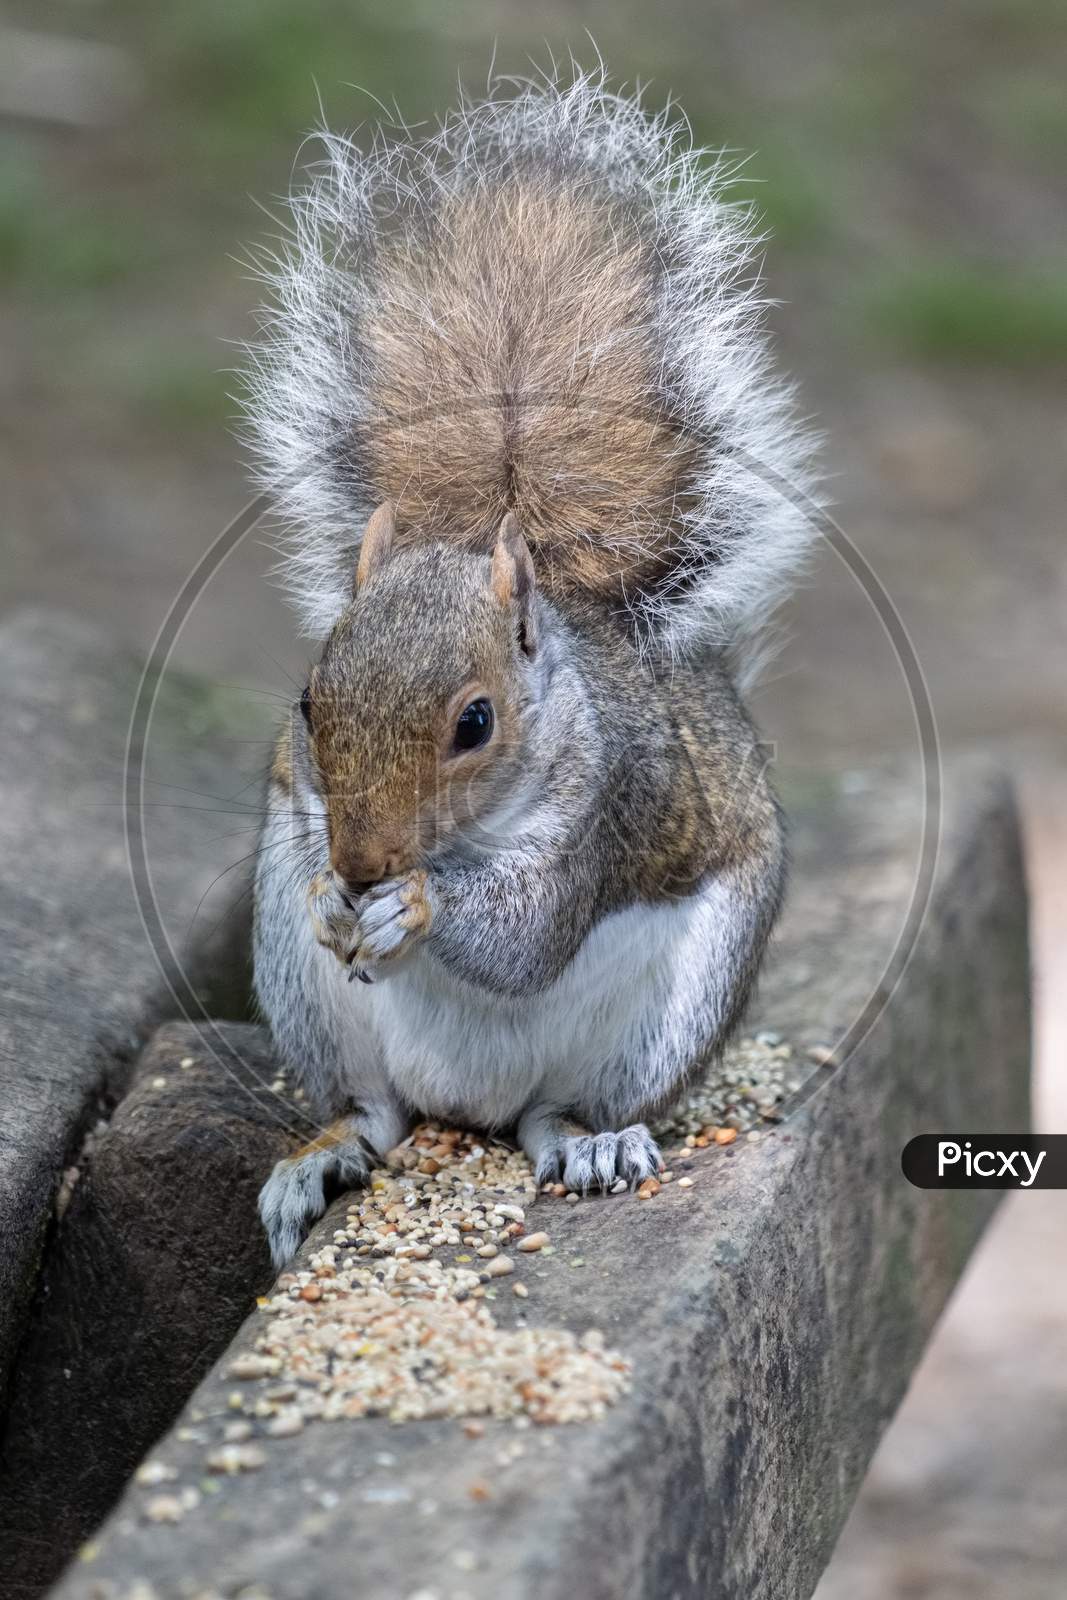 Grey Squirrel (Sciurus Carolinensis) Eating Seed On A Wooden Bench